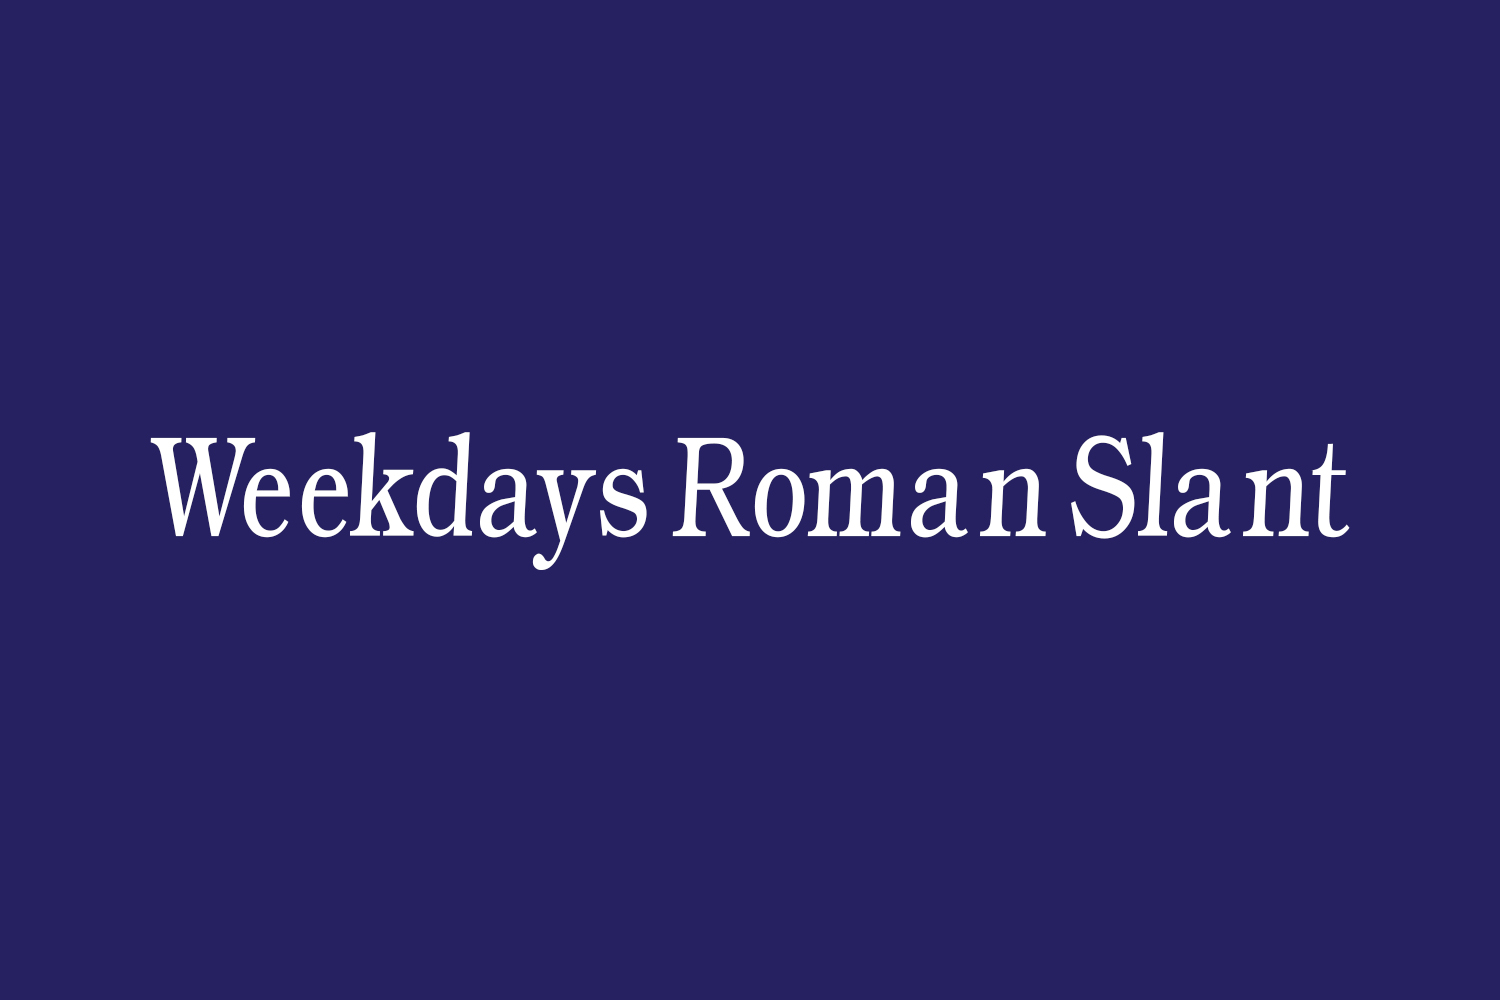 Weekdays Roman Slant